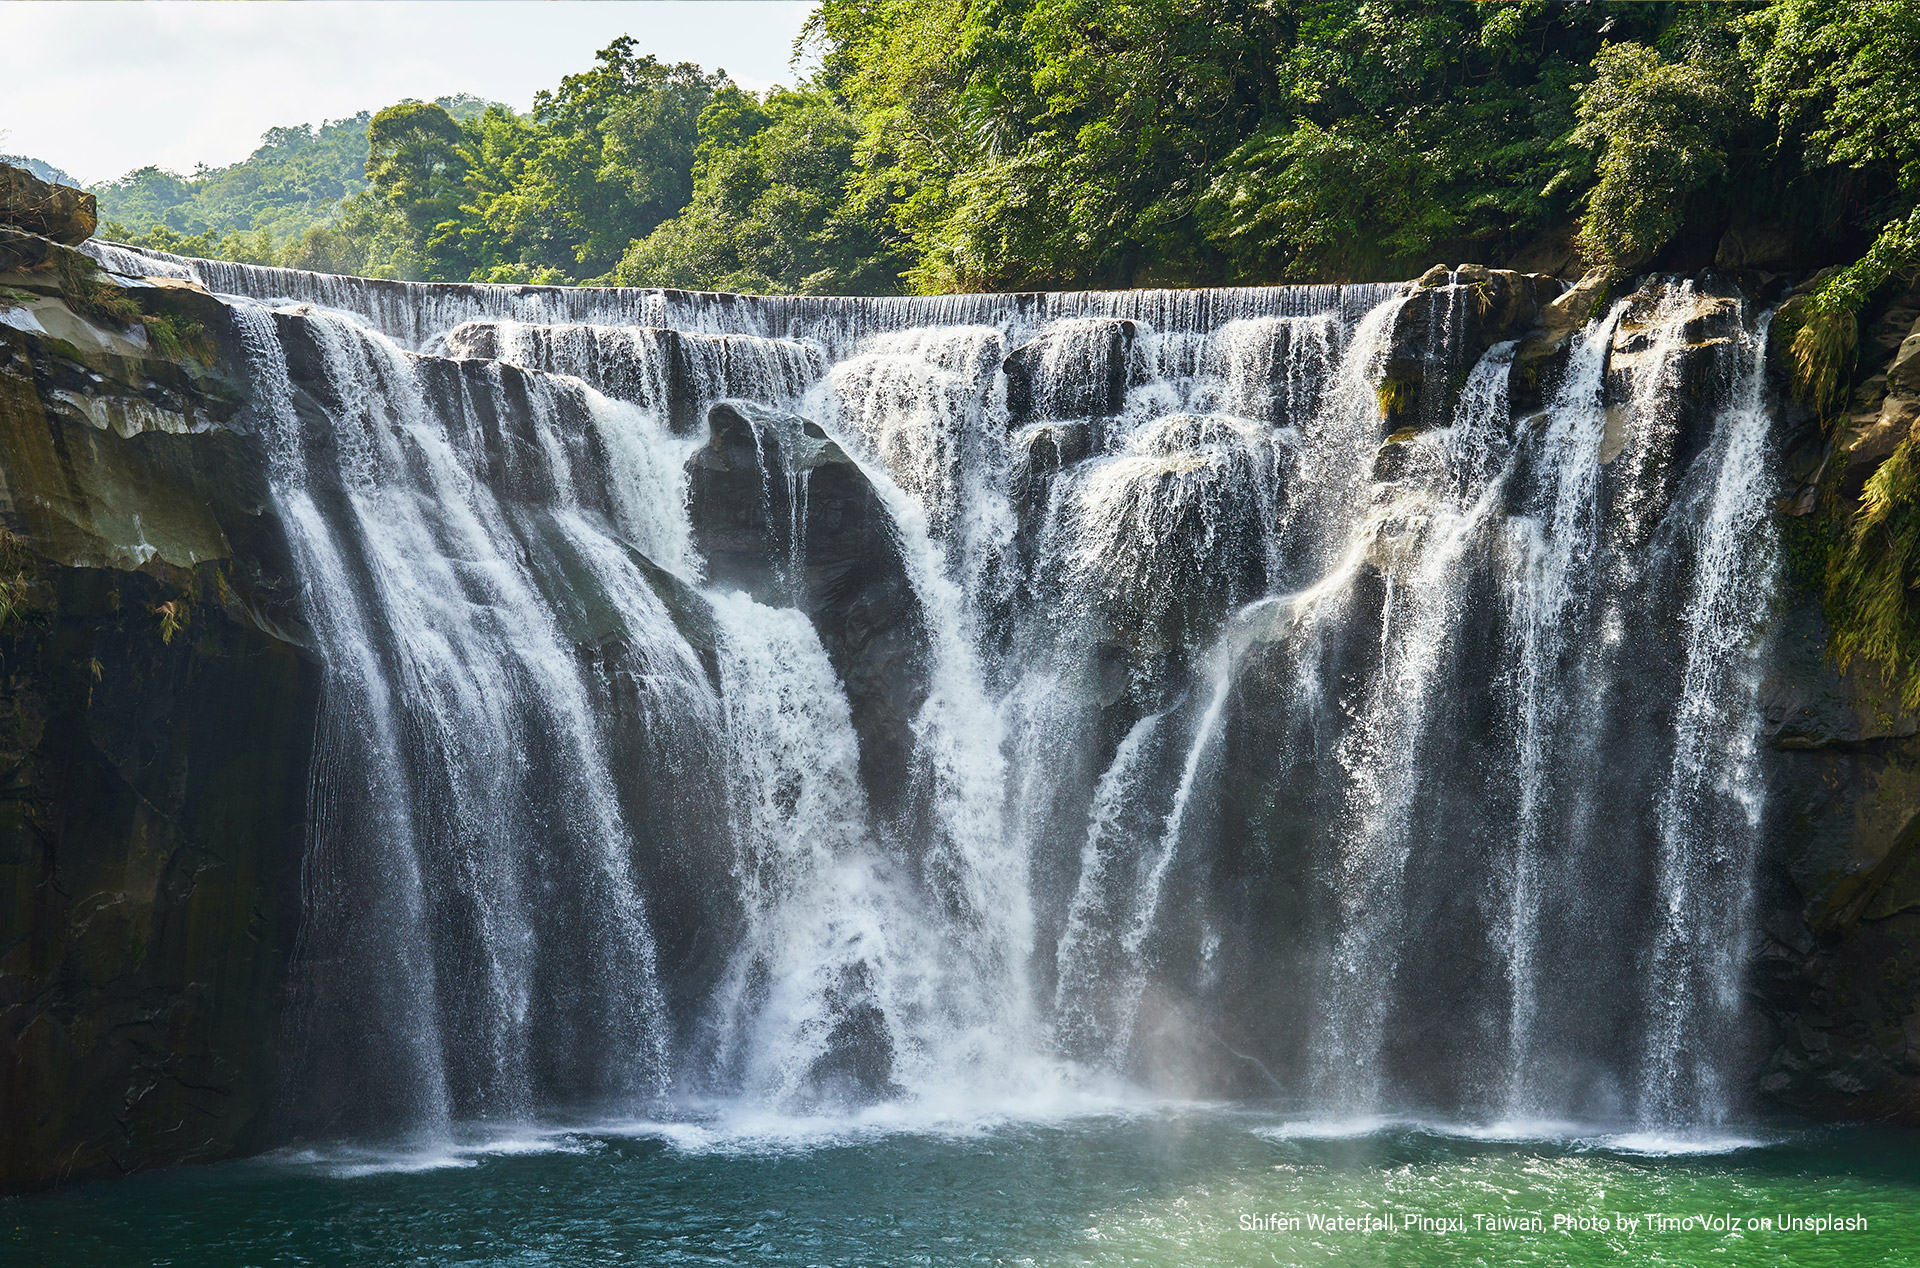 Shifen Waterfall, Pingxi, Taiwan, Photo by Timo Volz on Unsplash